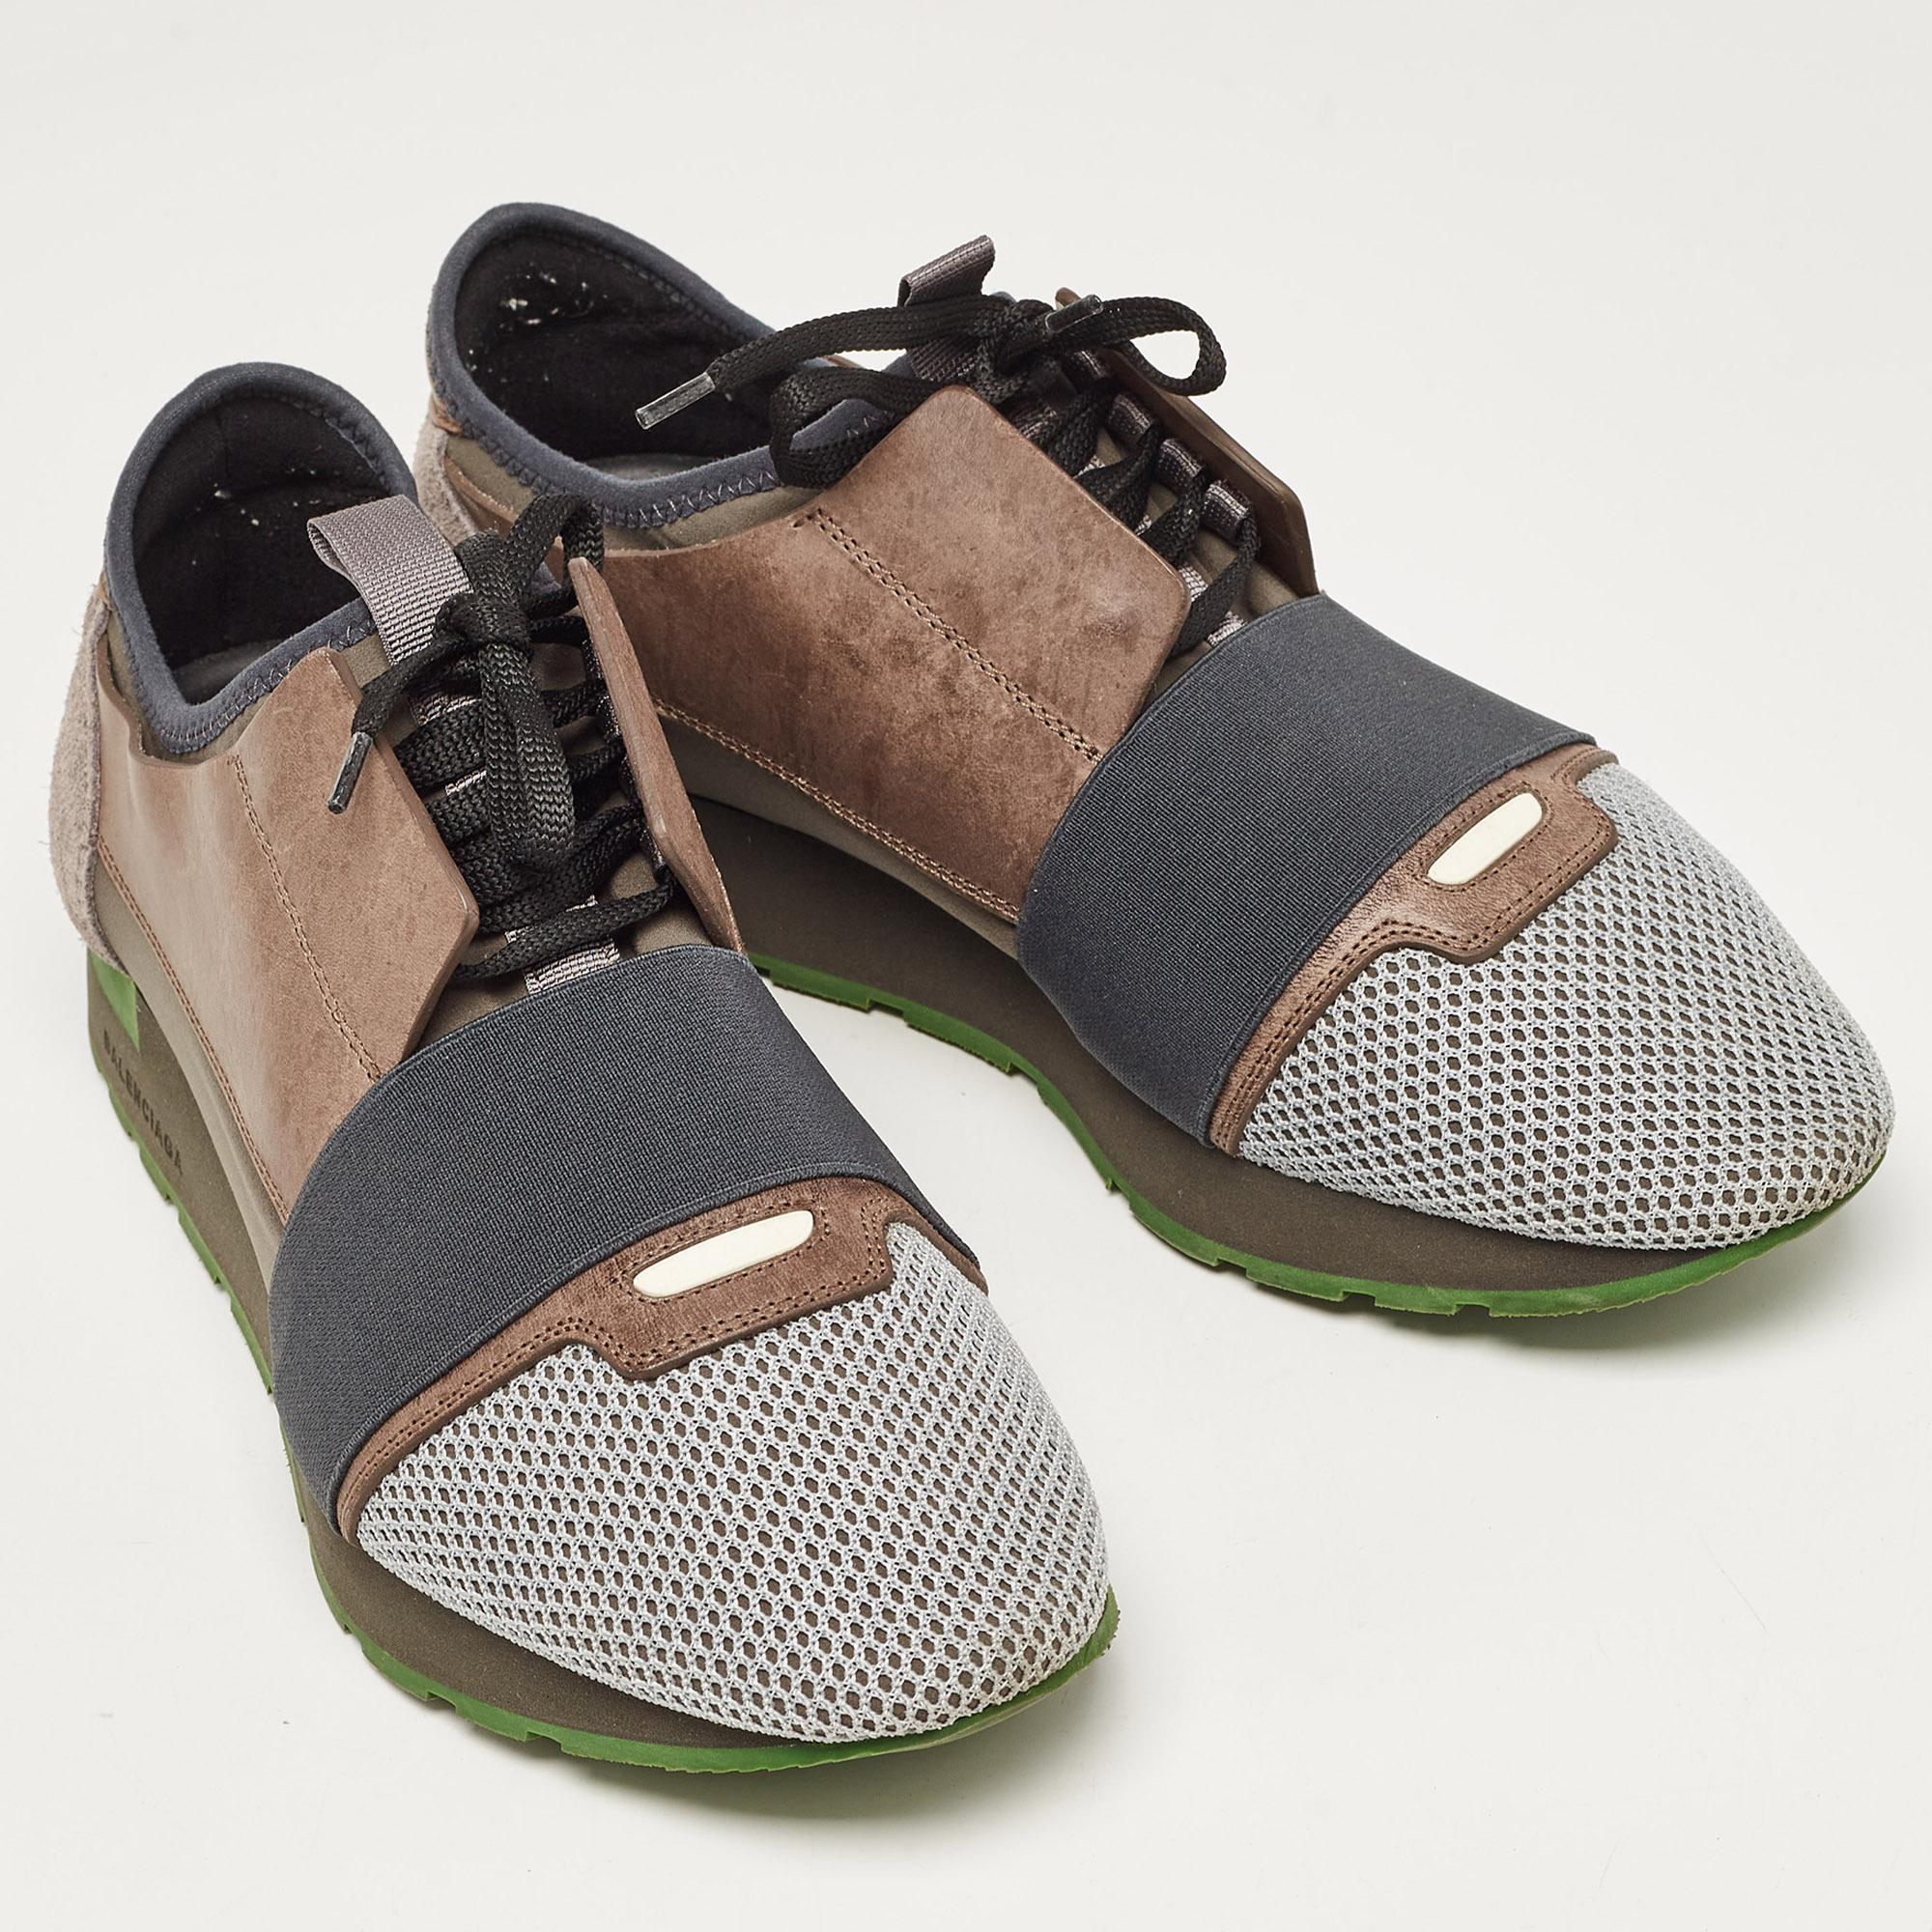 Balenciaga Multicolor Mesh and Leather Race Runner Sneakers Size 41 In Good Condition For Sale In Dubai, Al Qouz 2